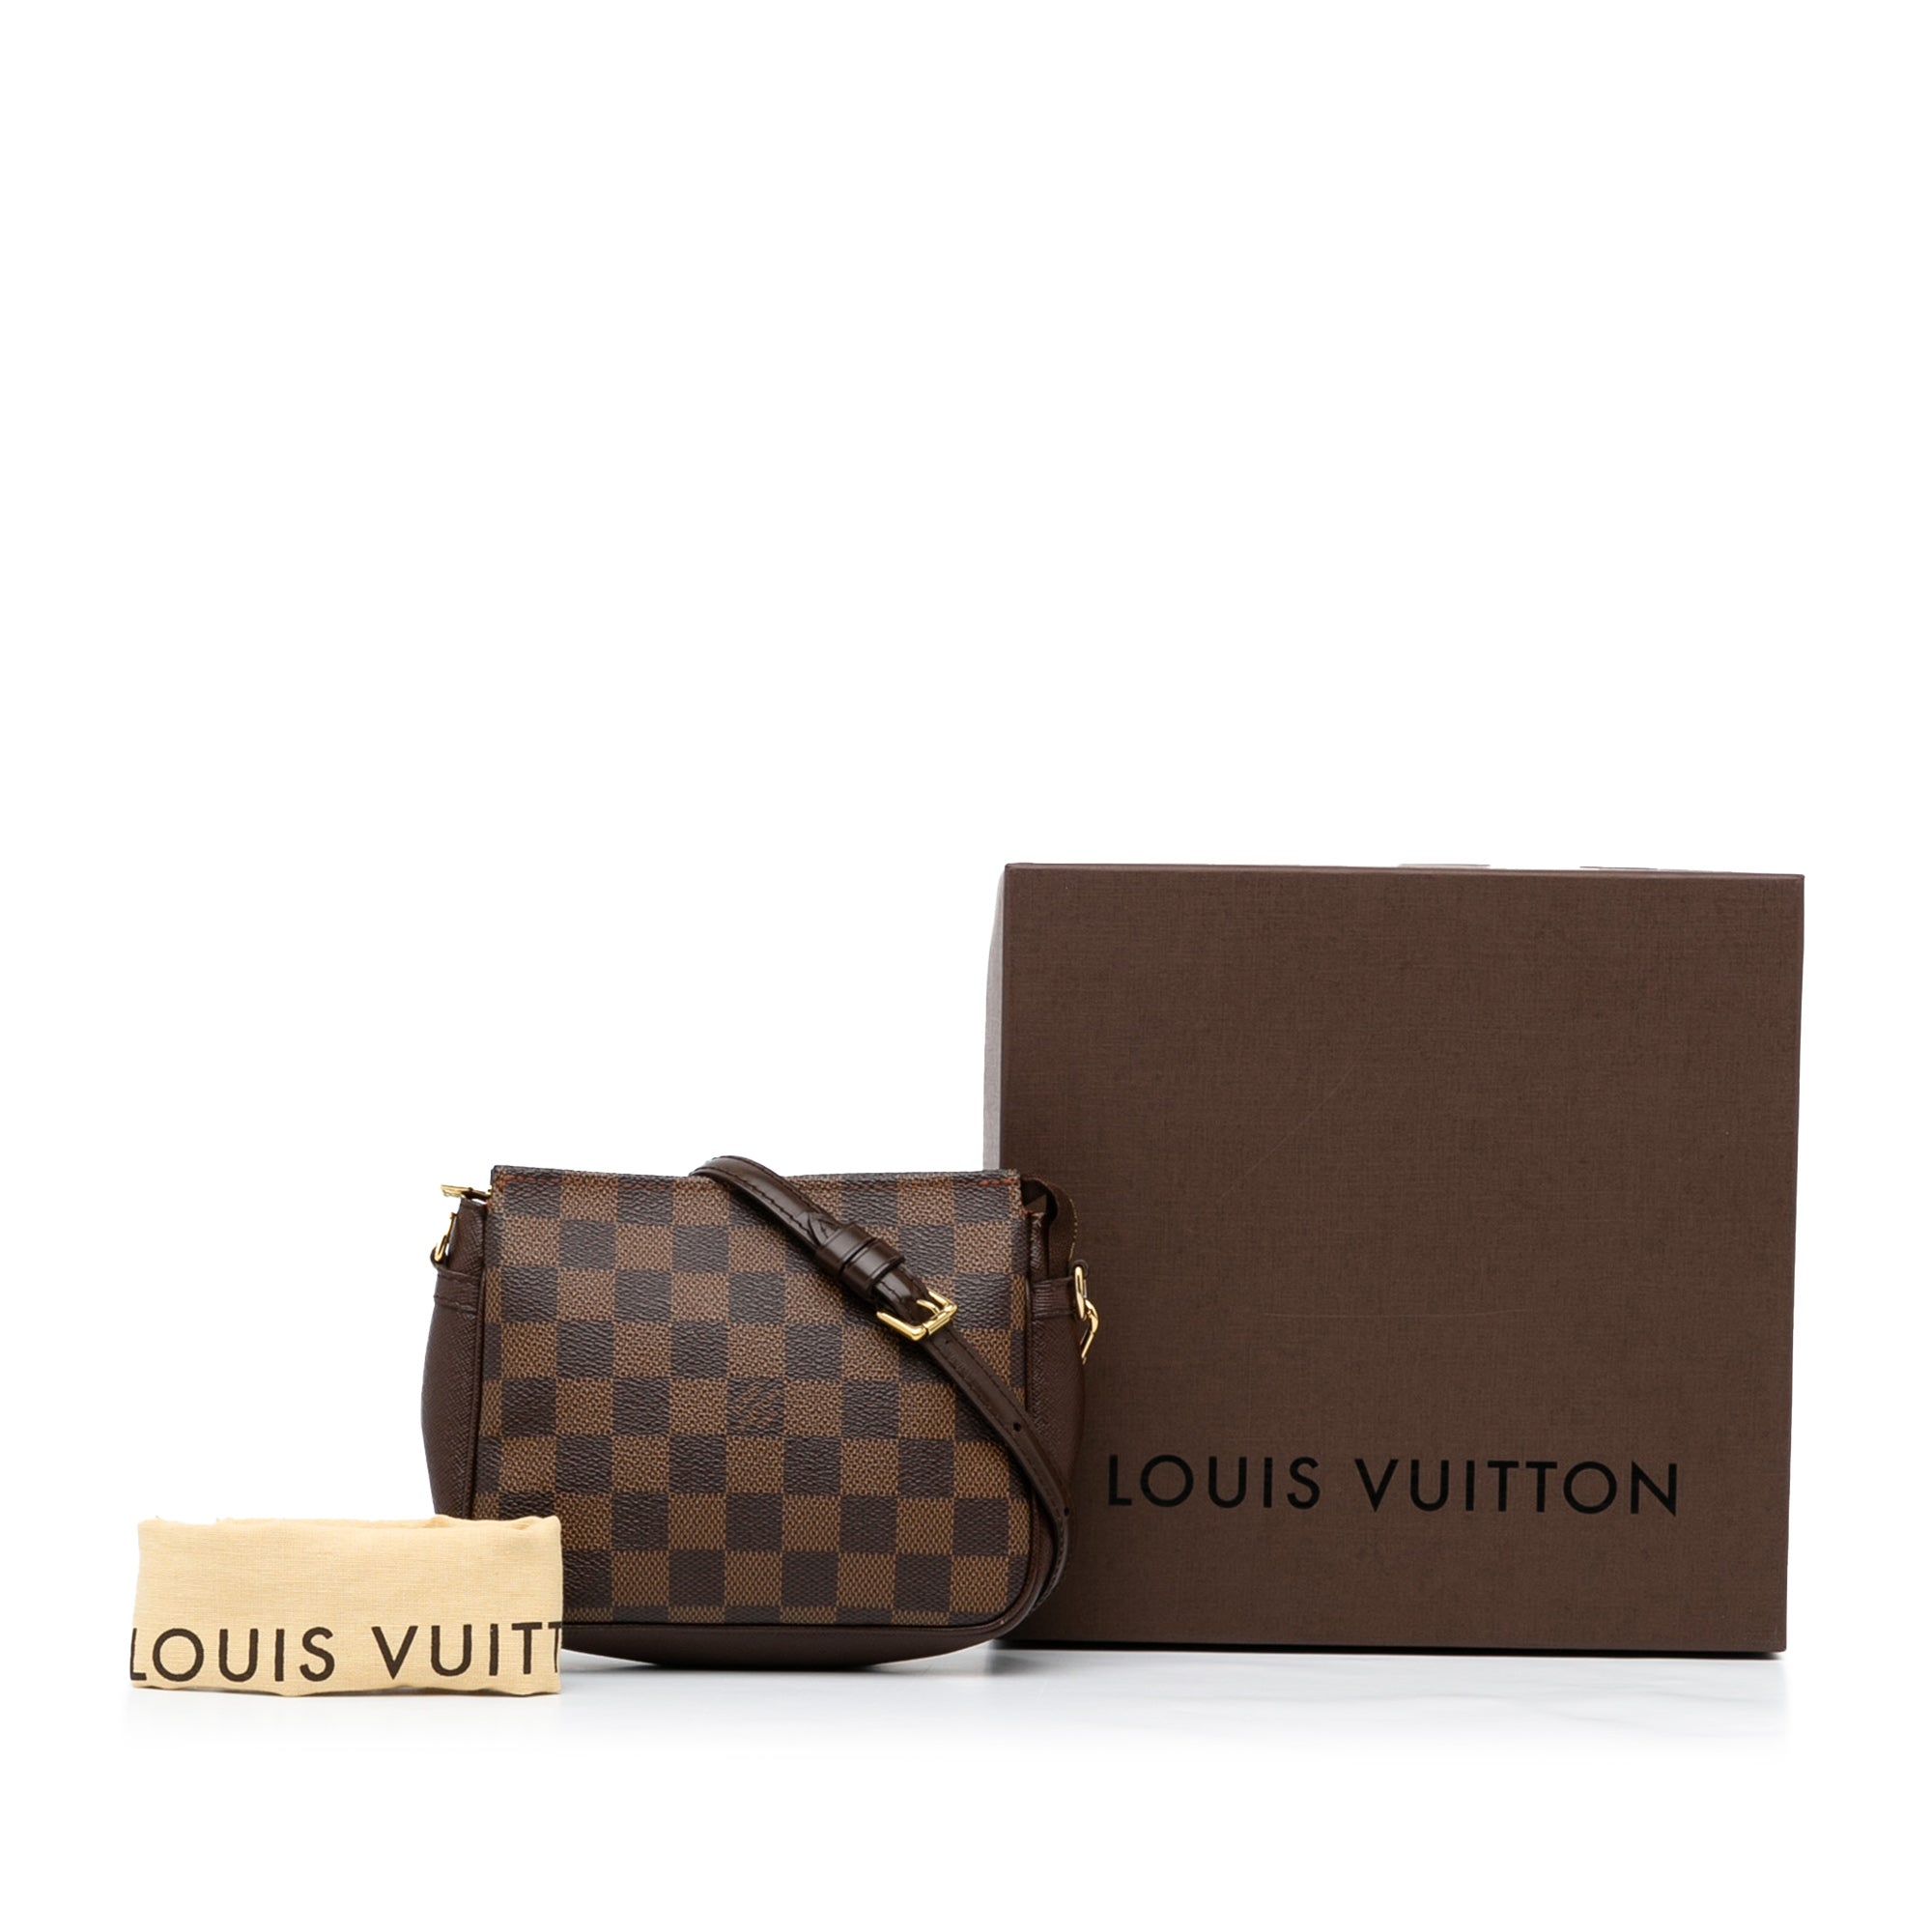 LOUIS VUITTON Damier Ebene Trousse Make Up Bag Pochette